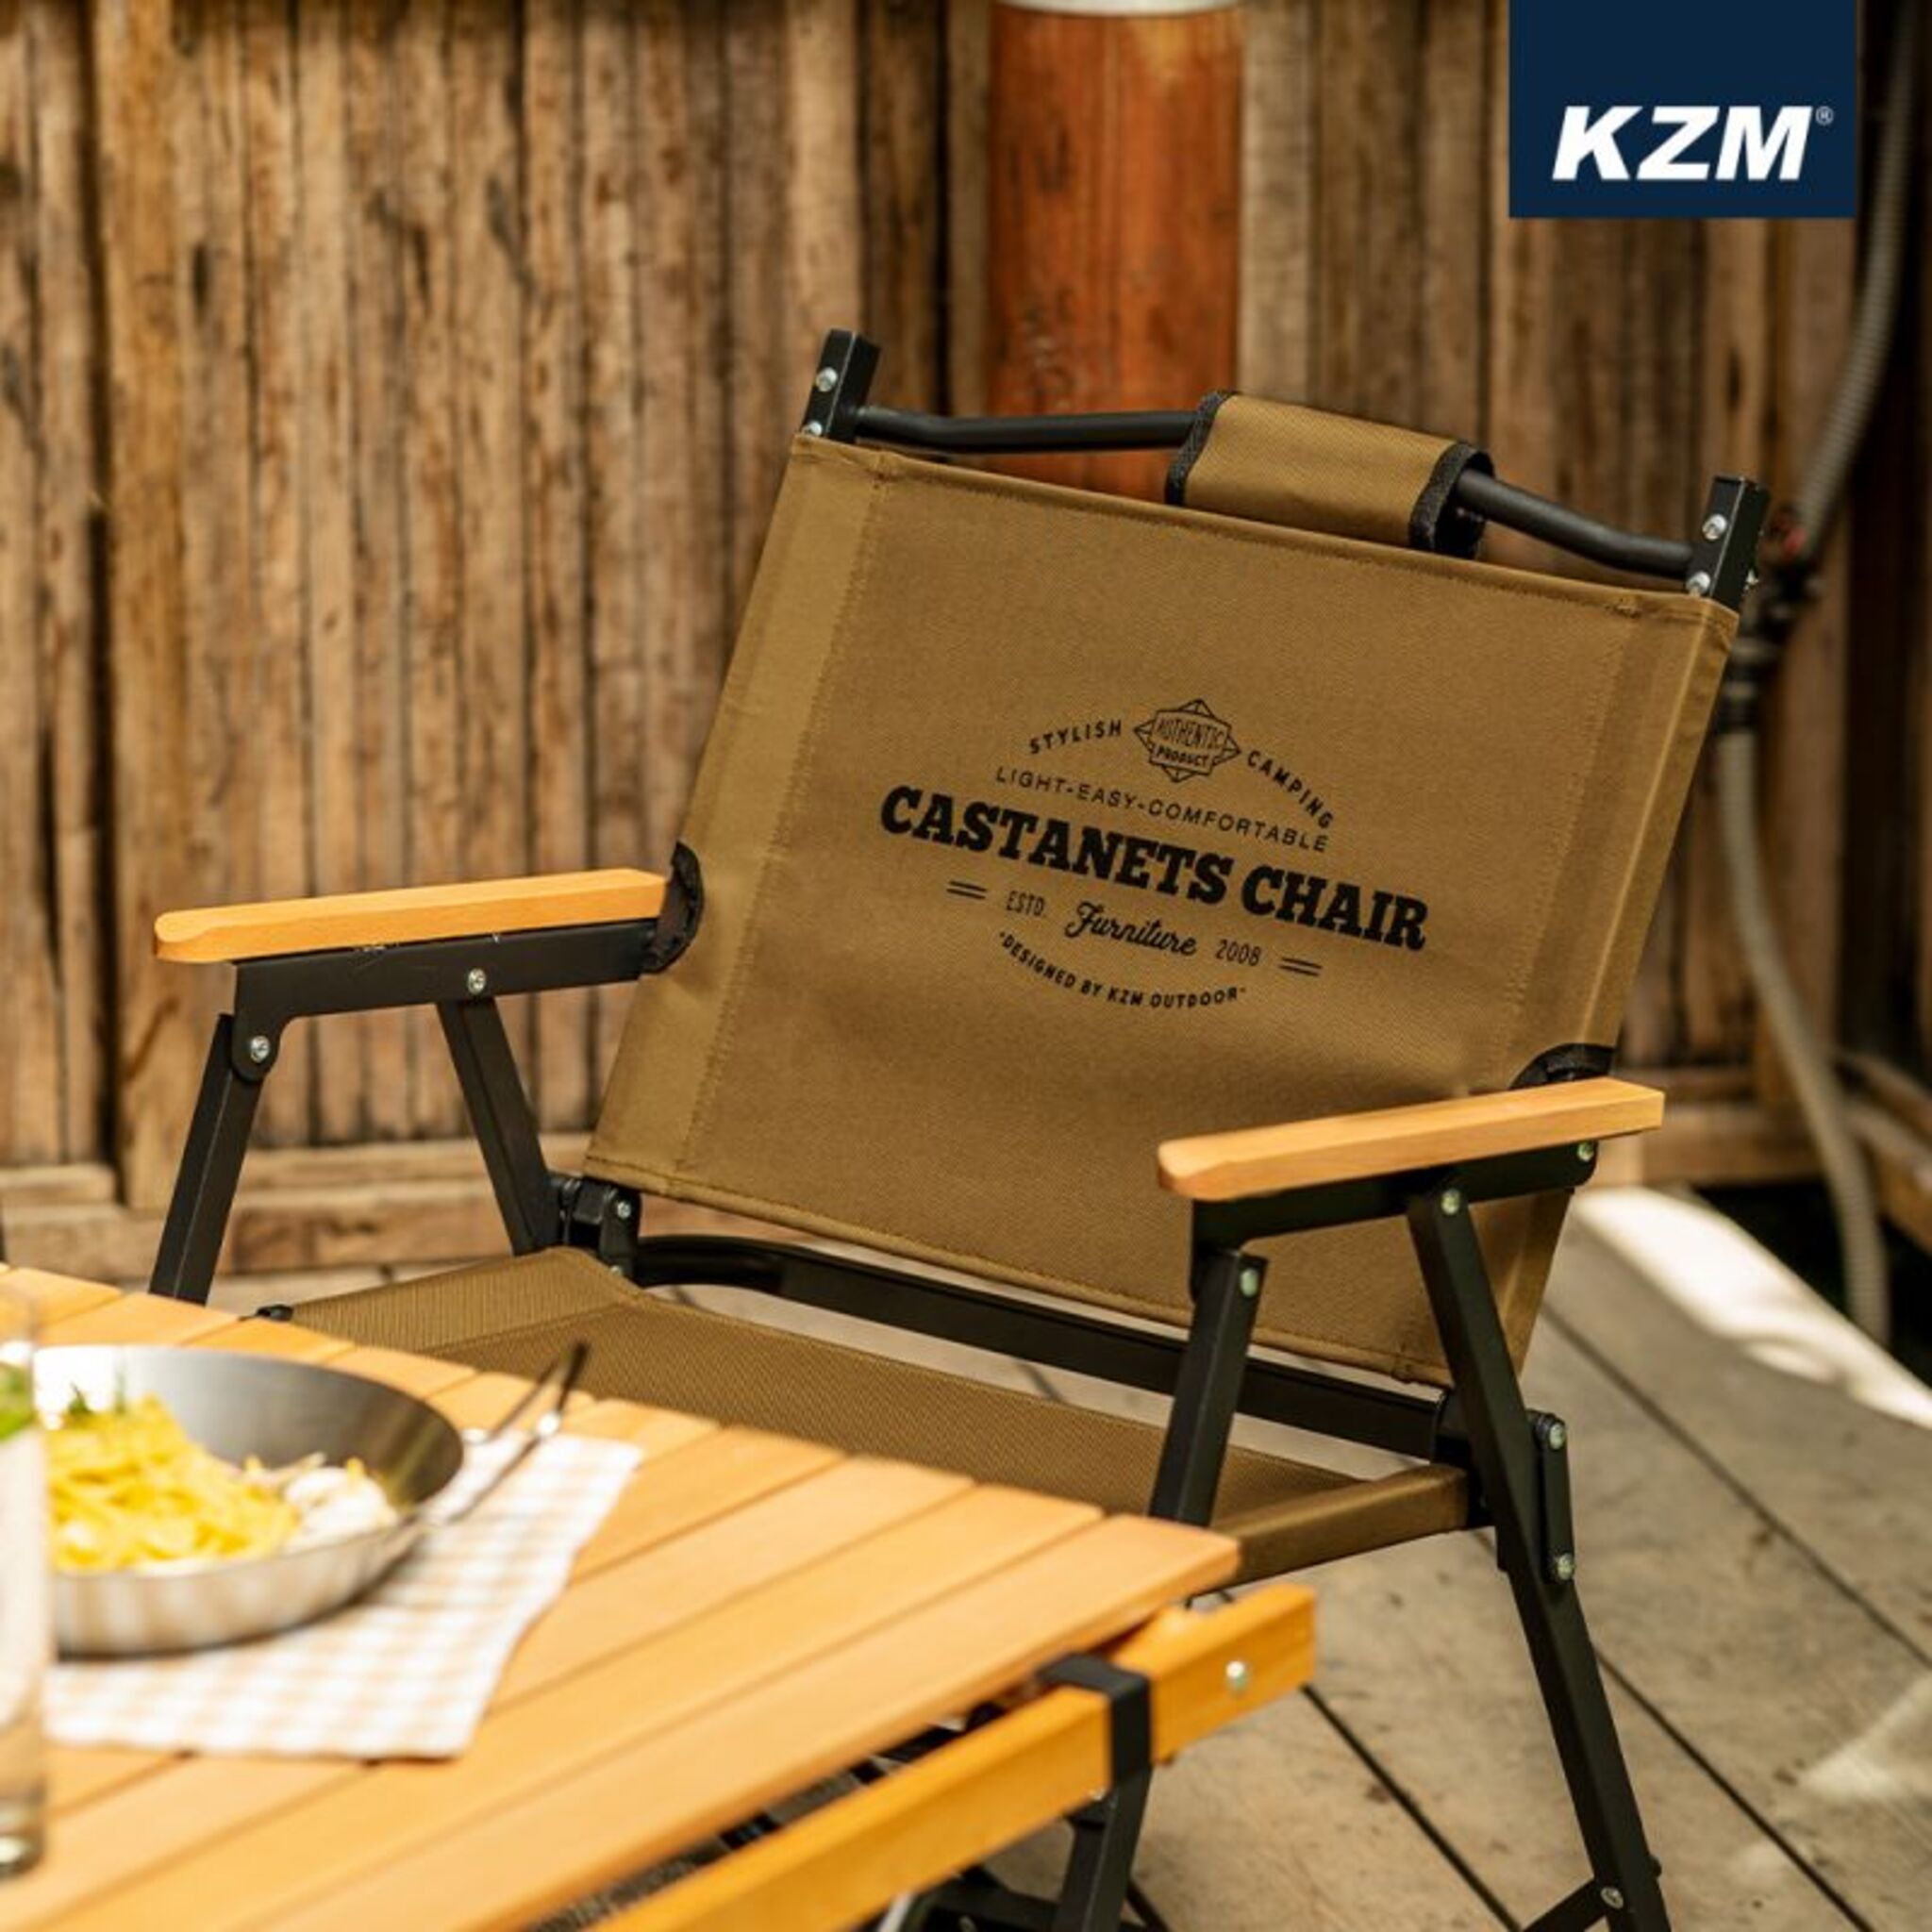 KZM KAZMI 素面木手把低座折疊椅 K20T1C026